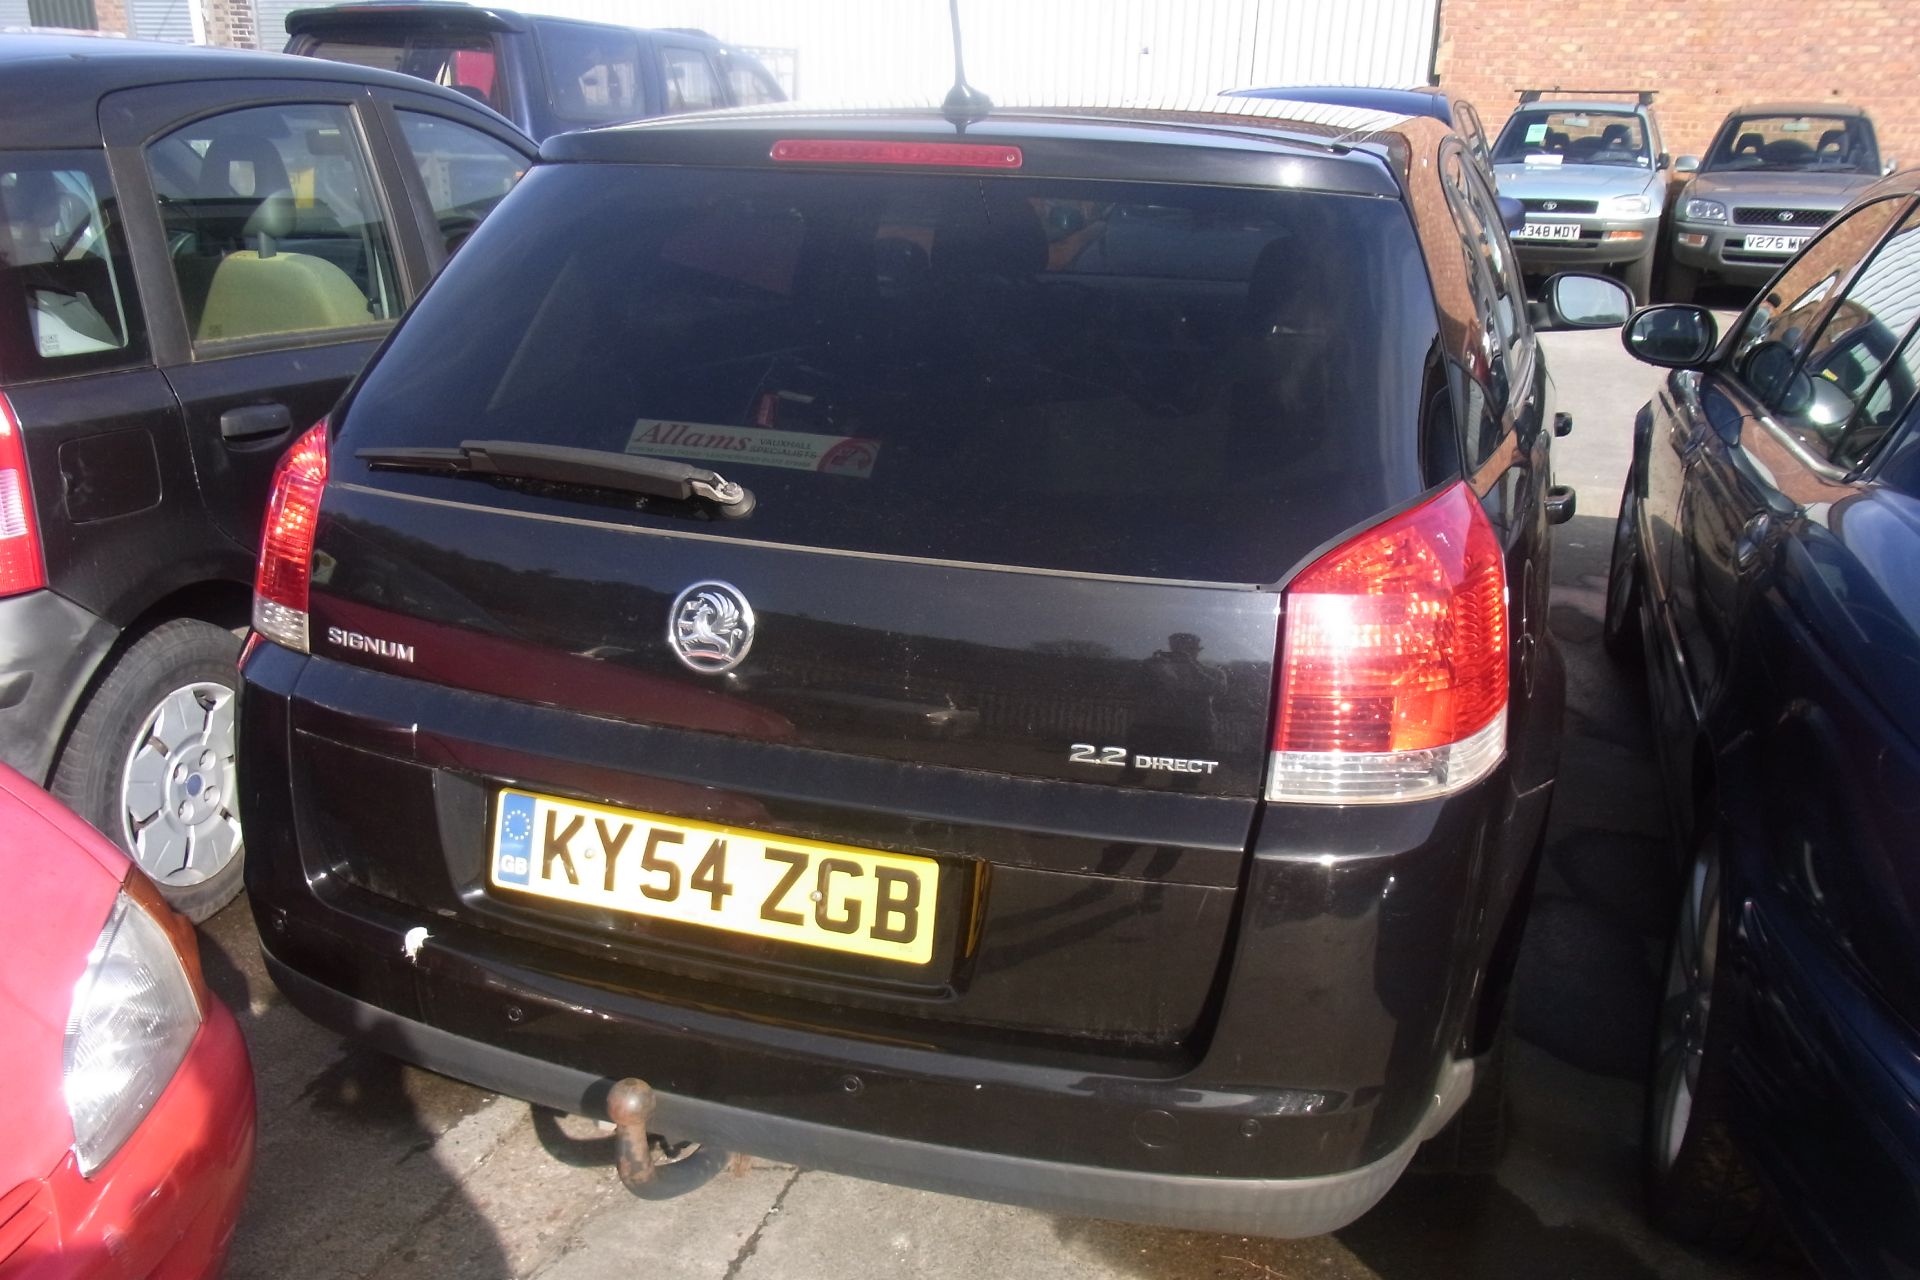 KY54 ZGB - Vauxhall Signum Elegance Direct A - Image 2 of 2